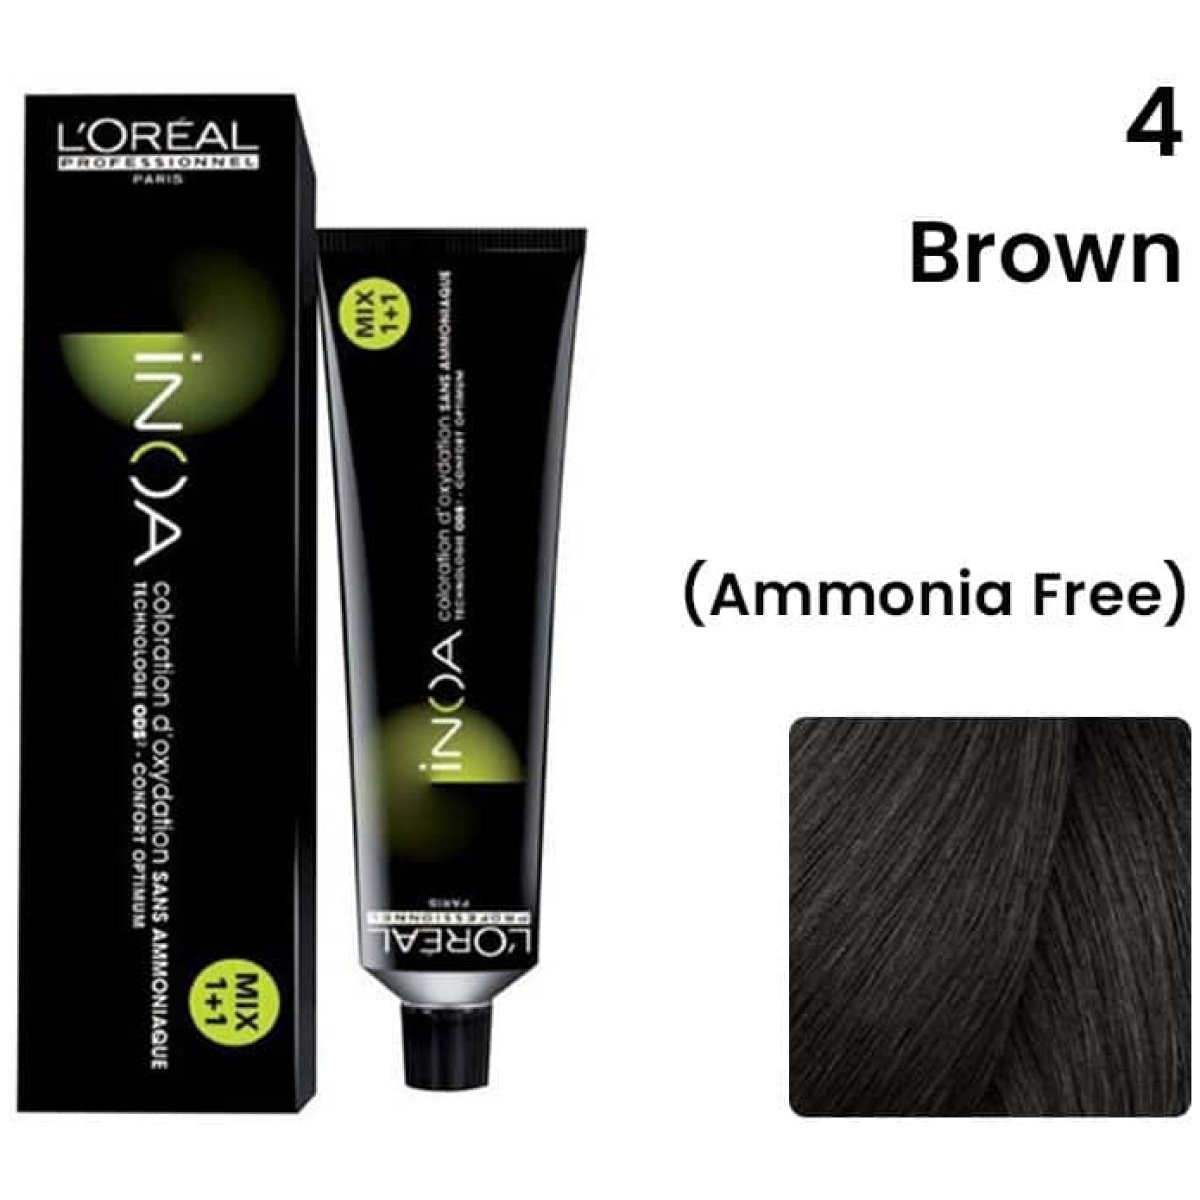 L'Oreal Inoa Ammonia Free Hair Color 60G 4 Brown